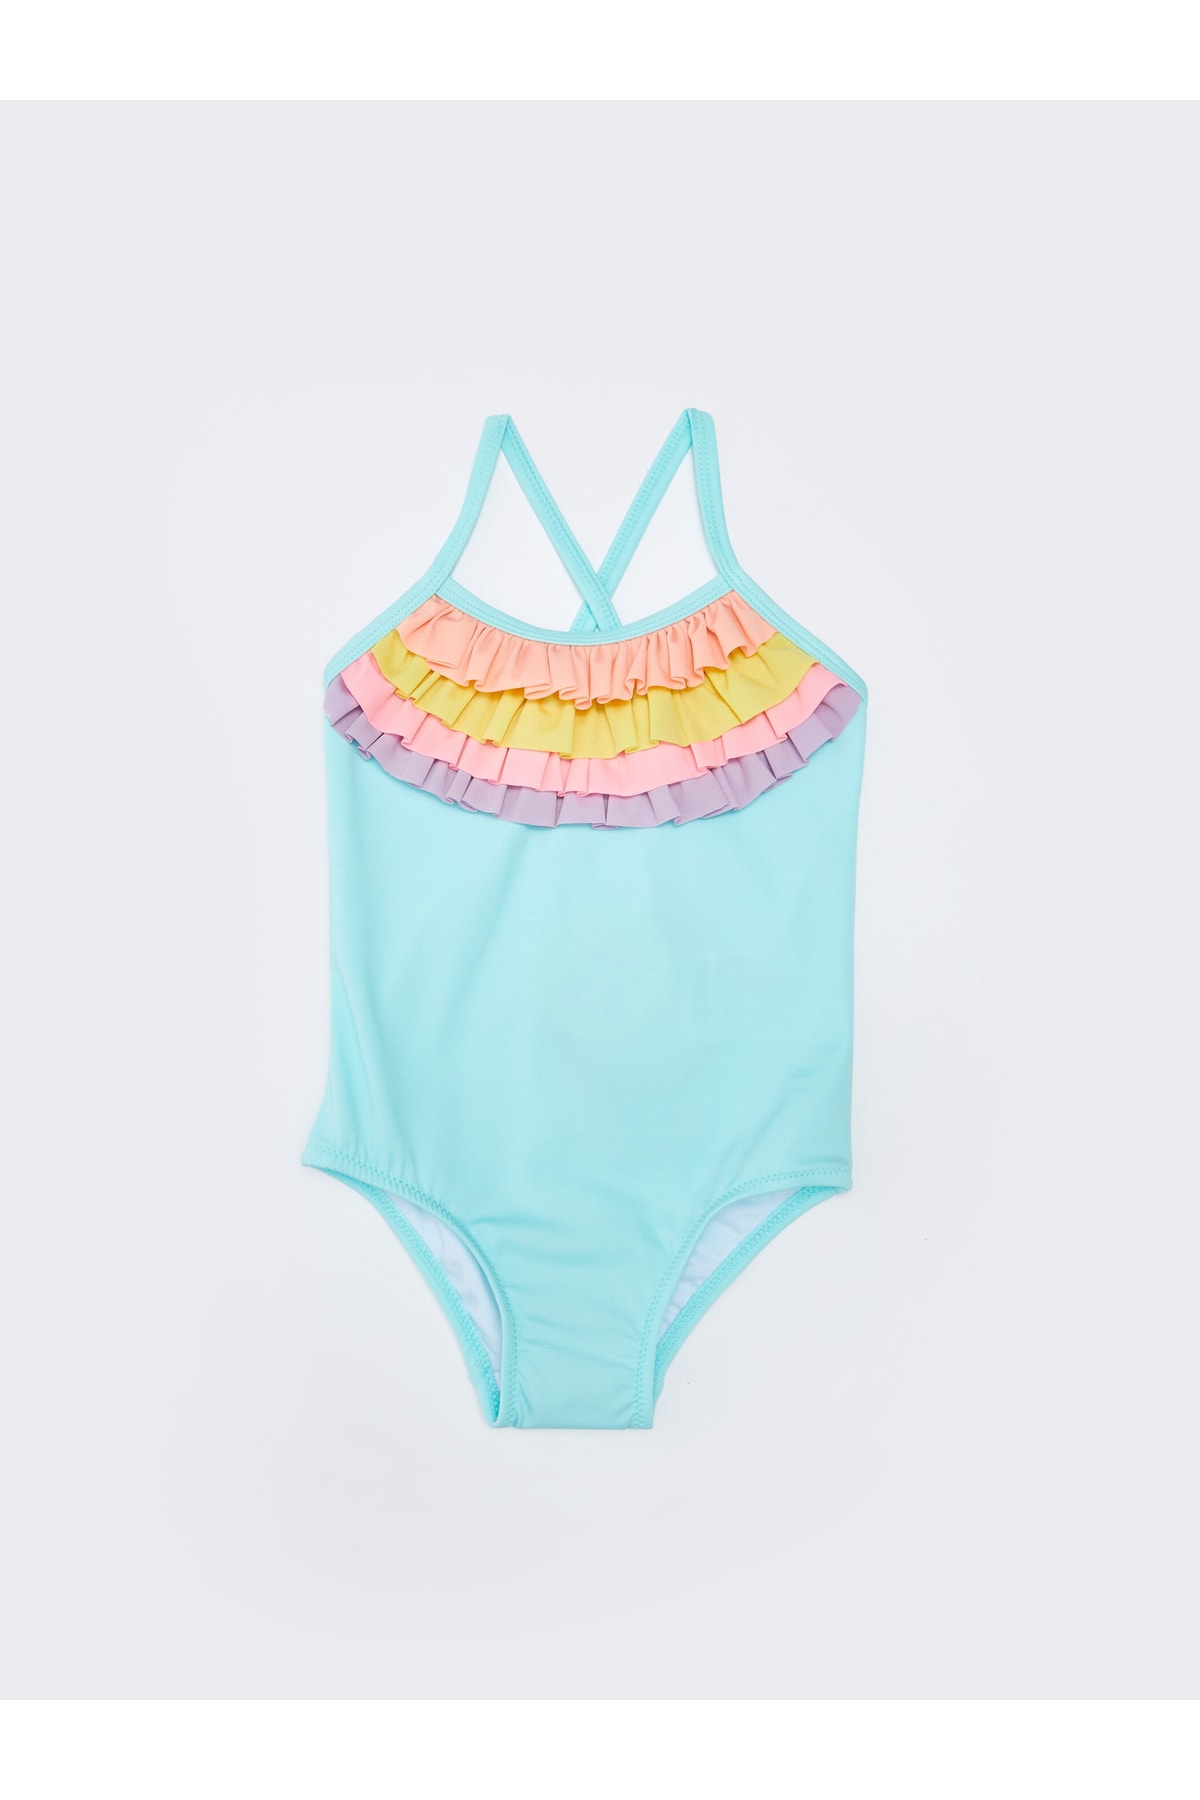 LC Waikiki Baby Girl Swimwear Made of Flexible Fabric